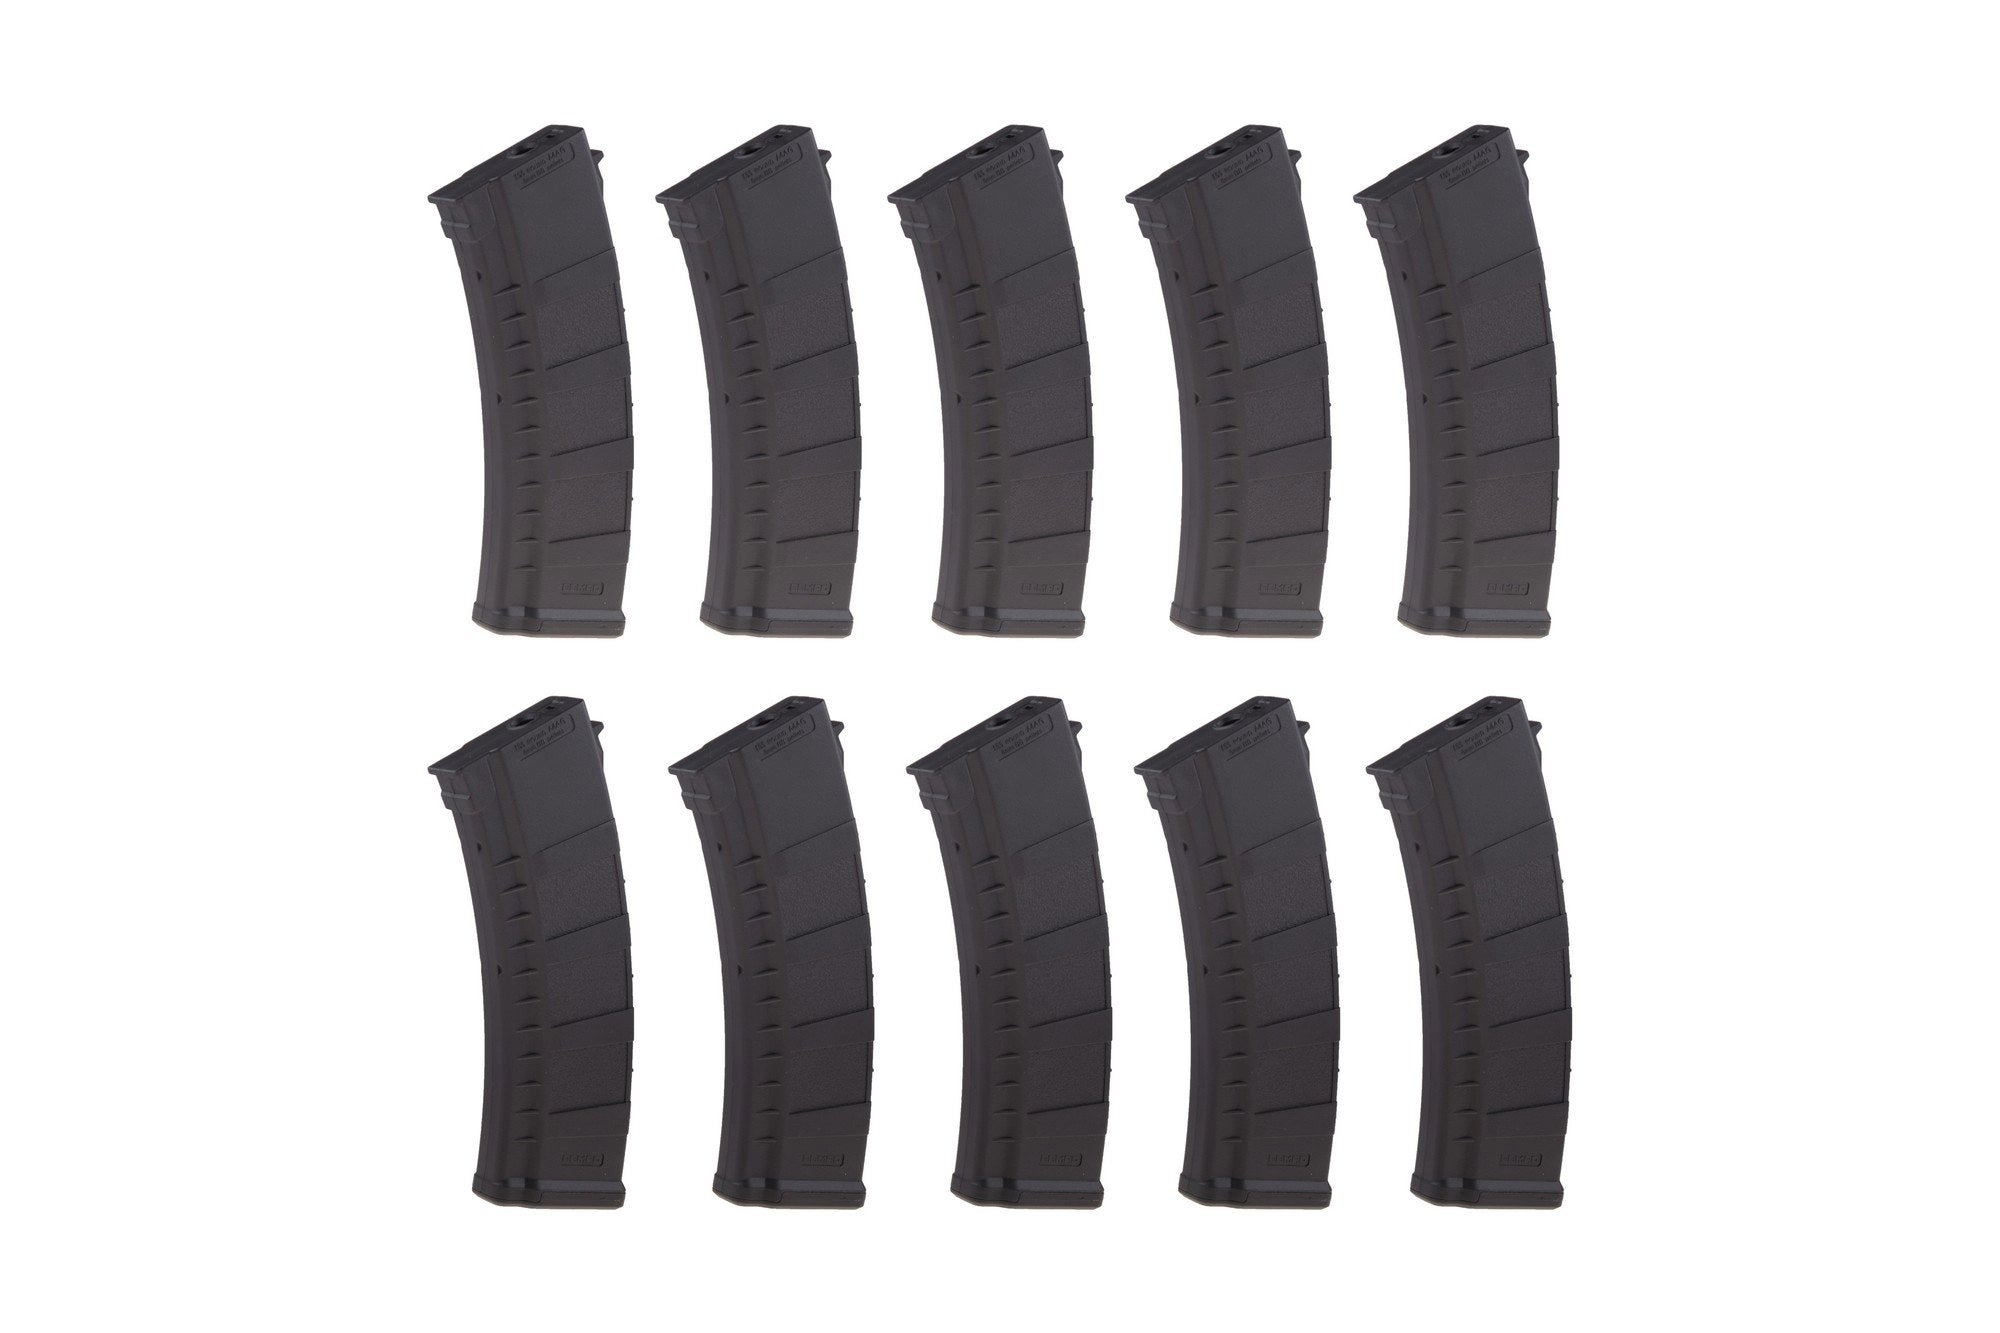 Set of 10 Mid-Cap 155 BB Magazines for AK Replicas - Black